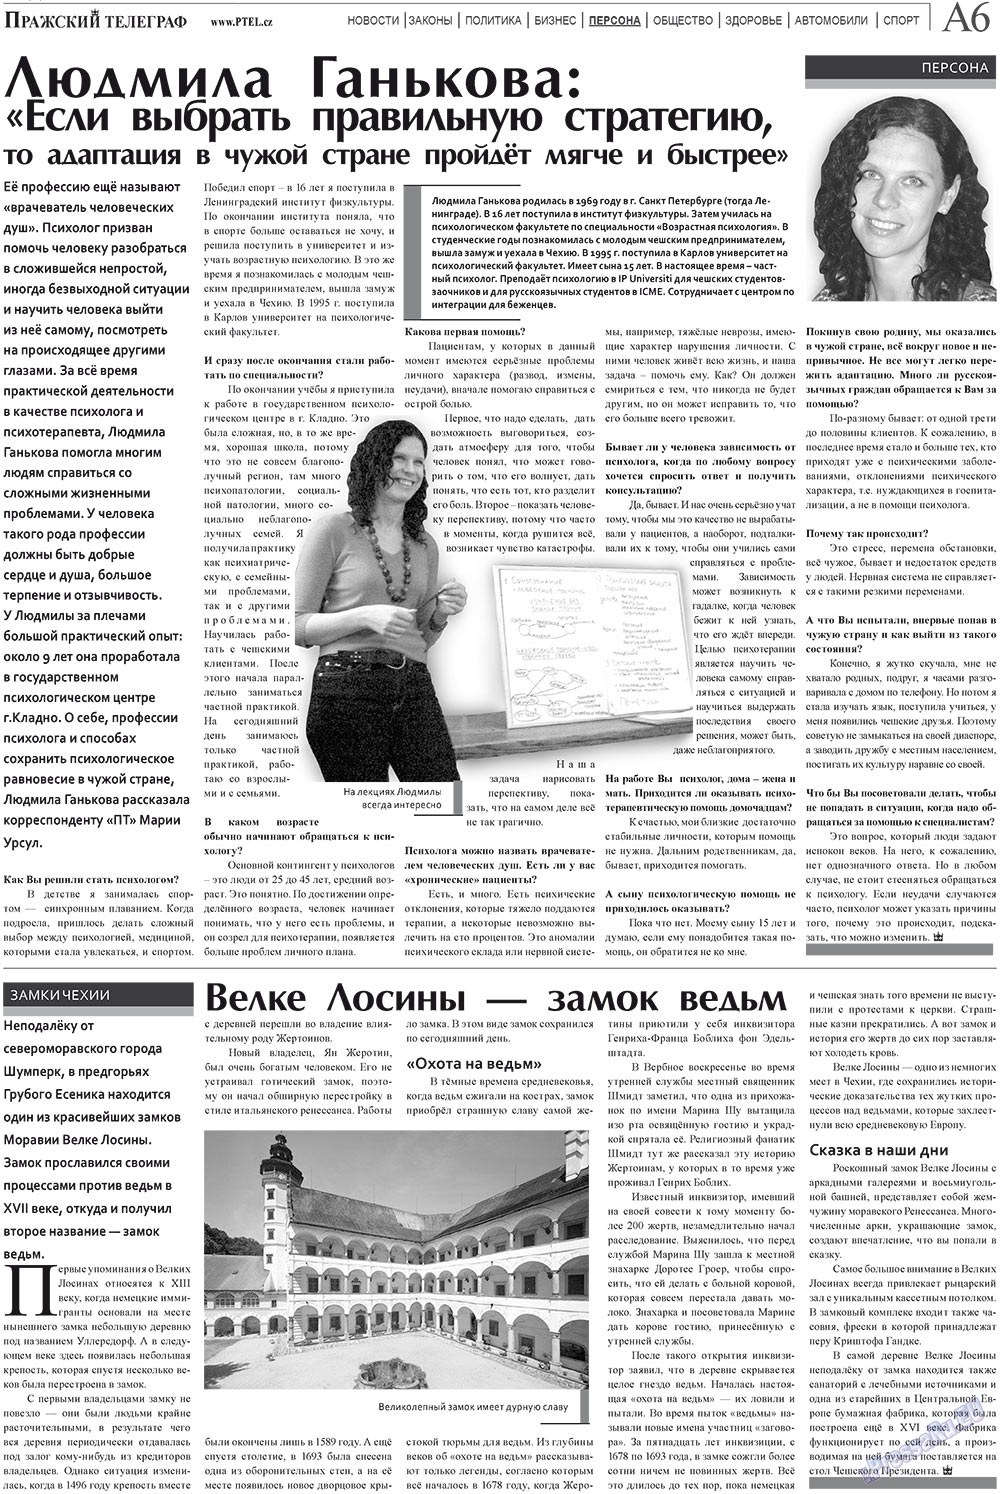 Пражский телеграф, газета. 2010 №41 стр.6